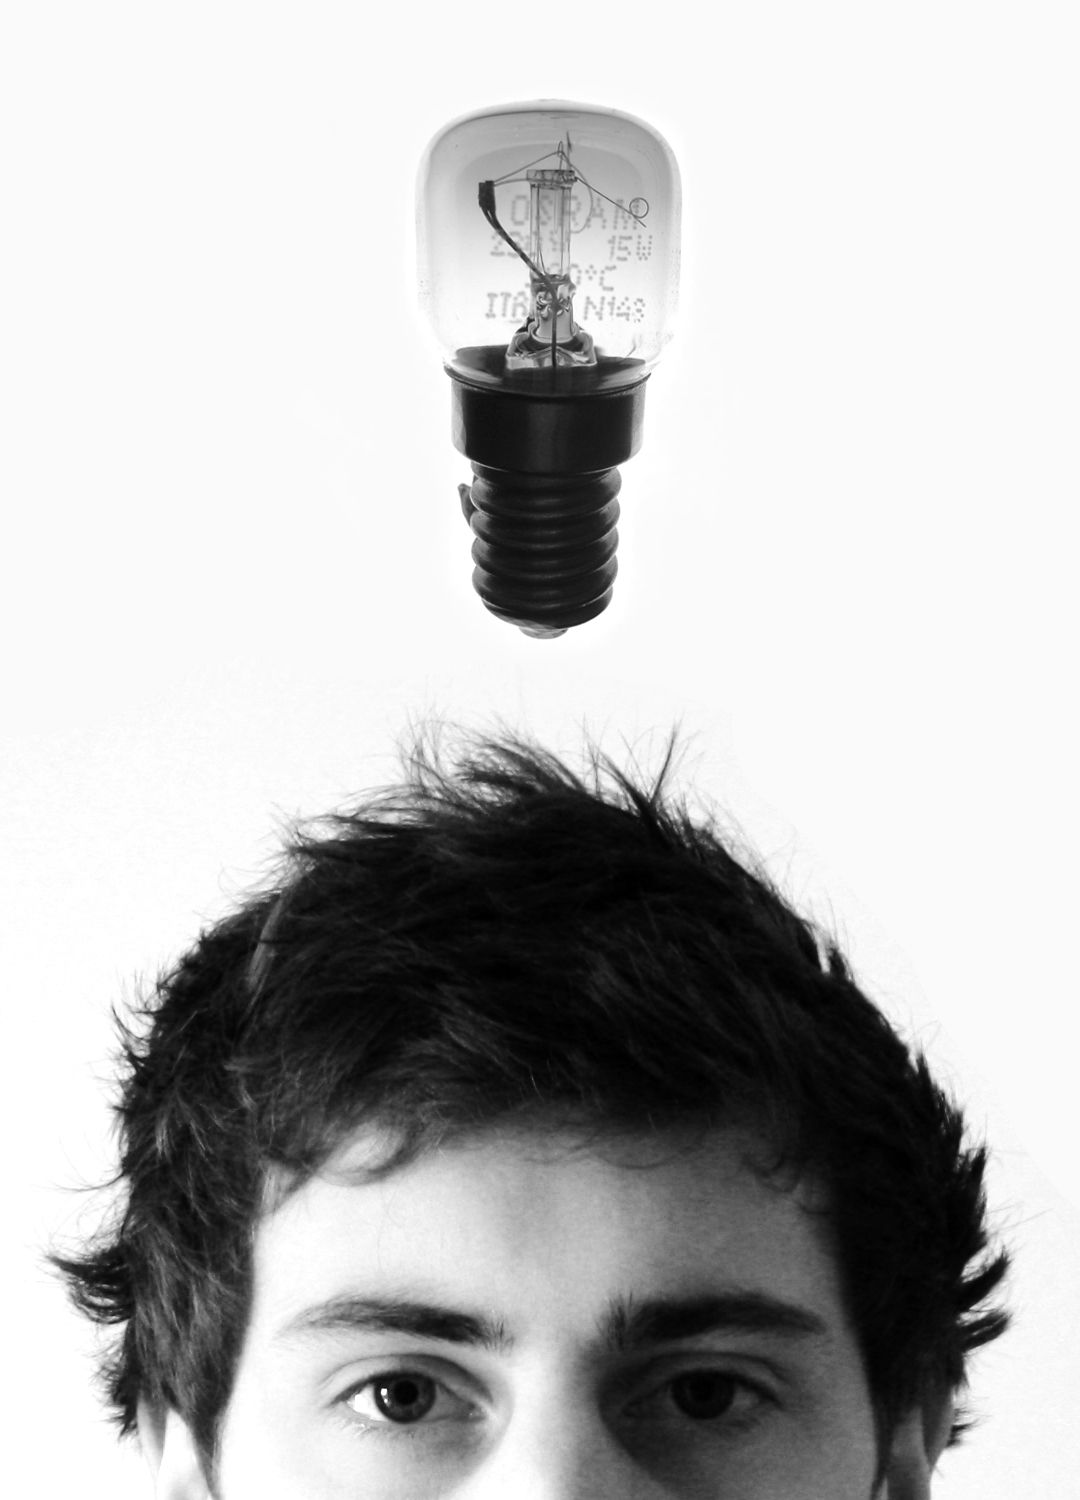 Matt Wynn: Lightbulb! With an idea perhaps. (flickr)